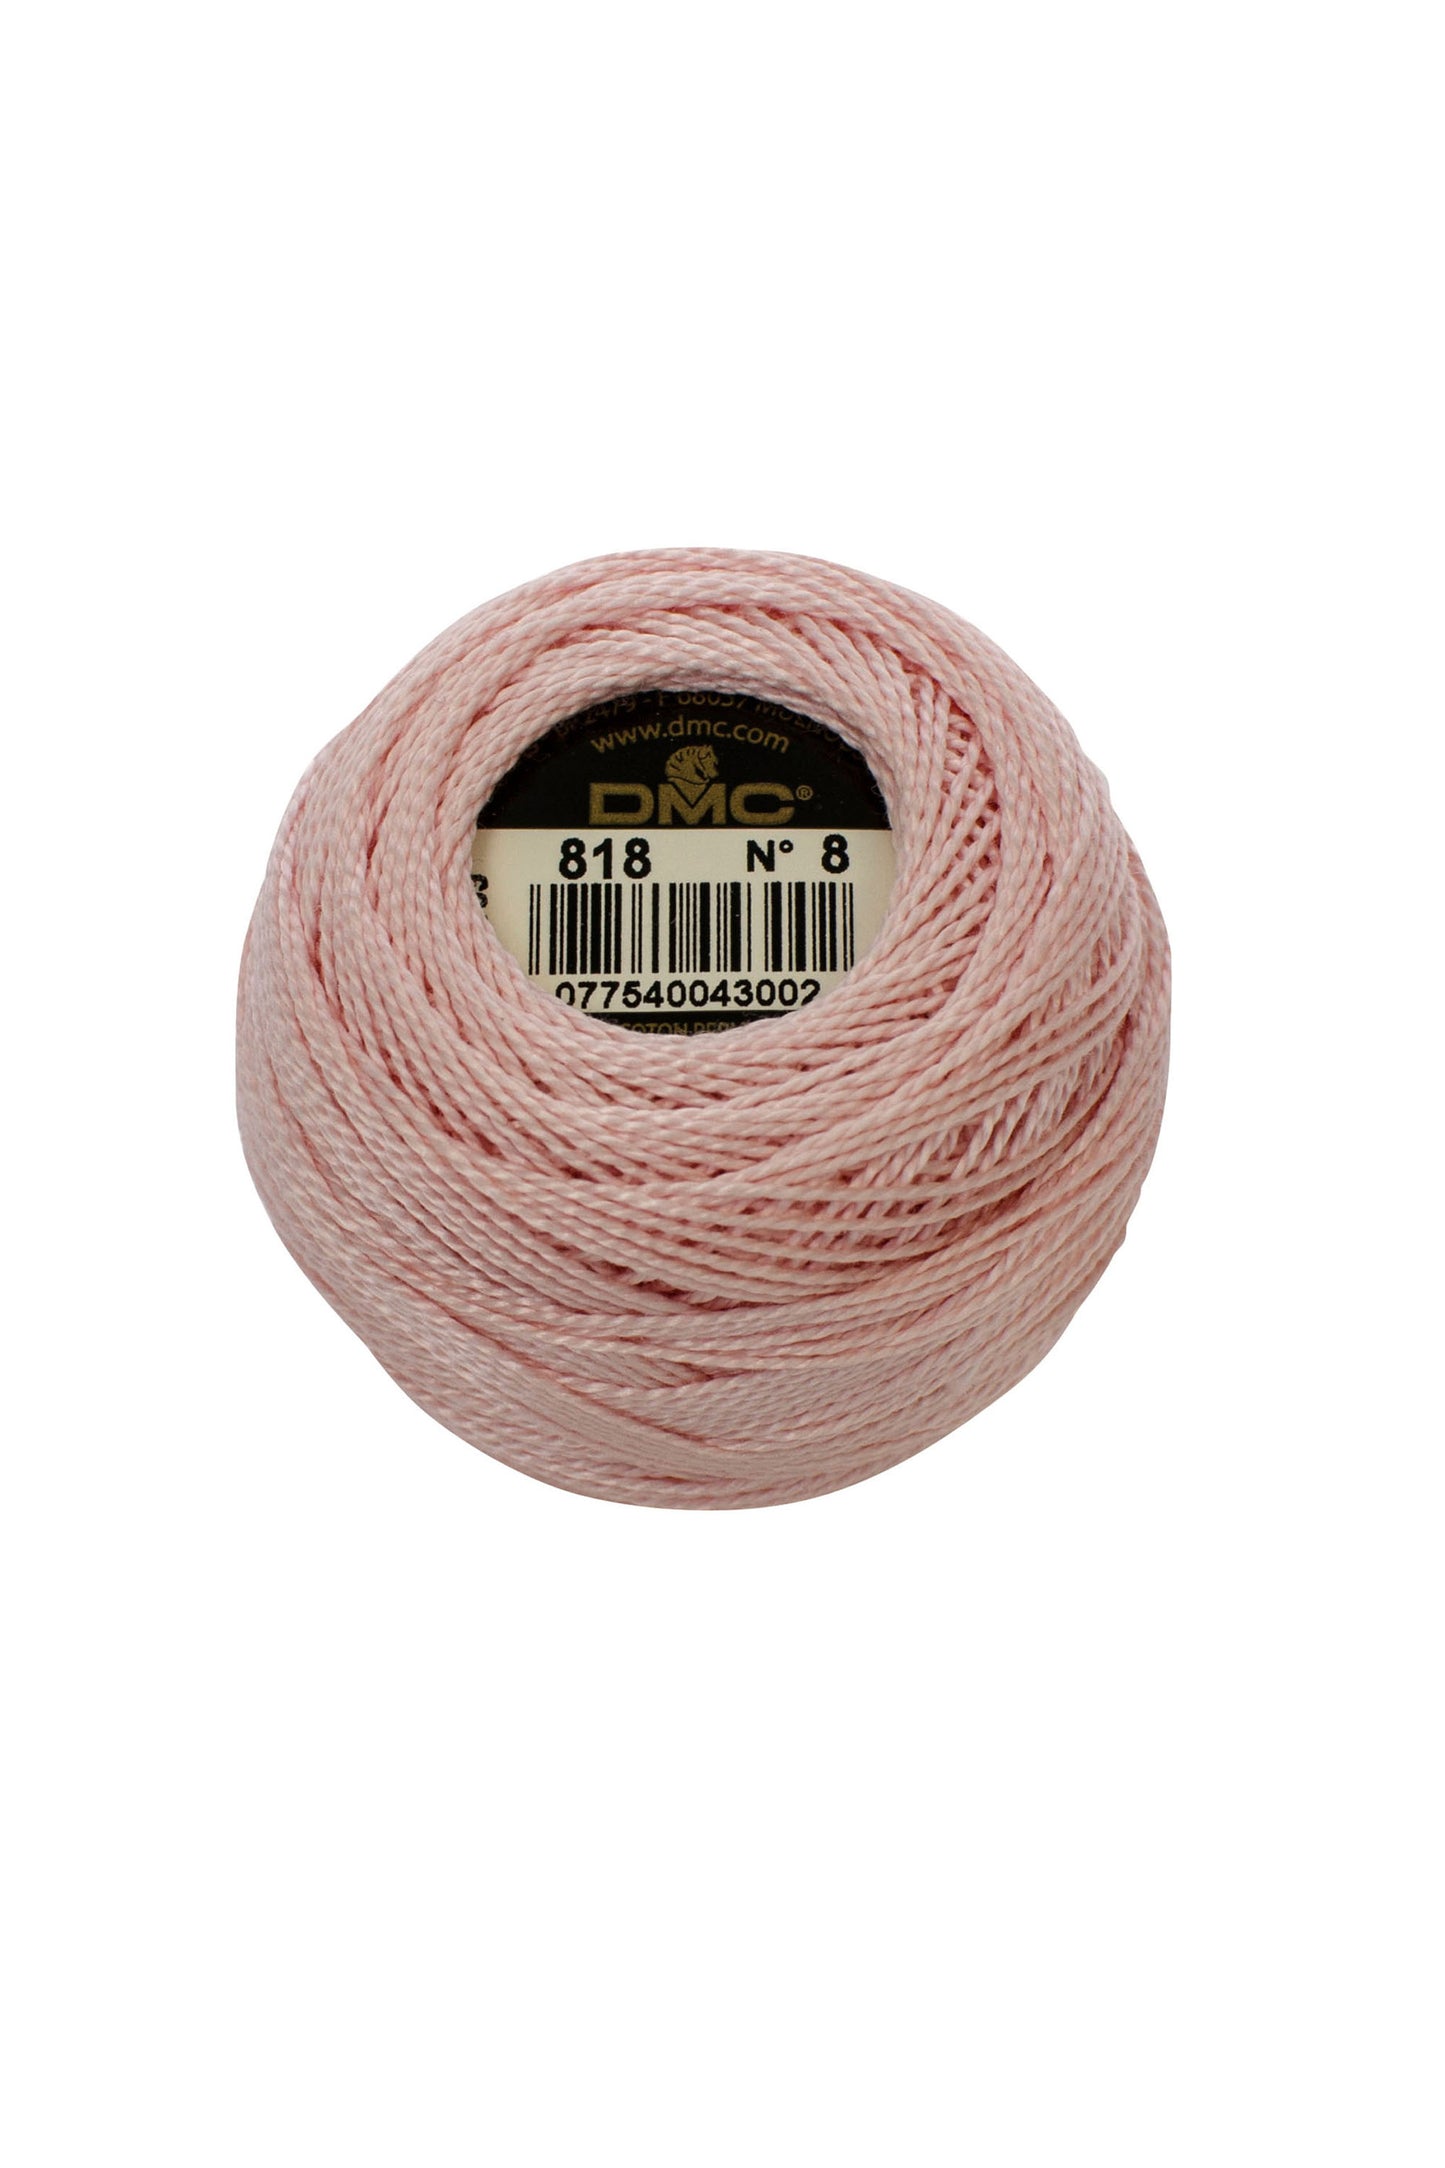 818 Baby Pink - DMC #5 Perle Cotton Ball